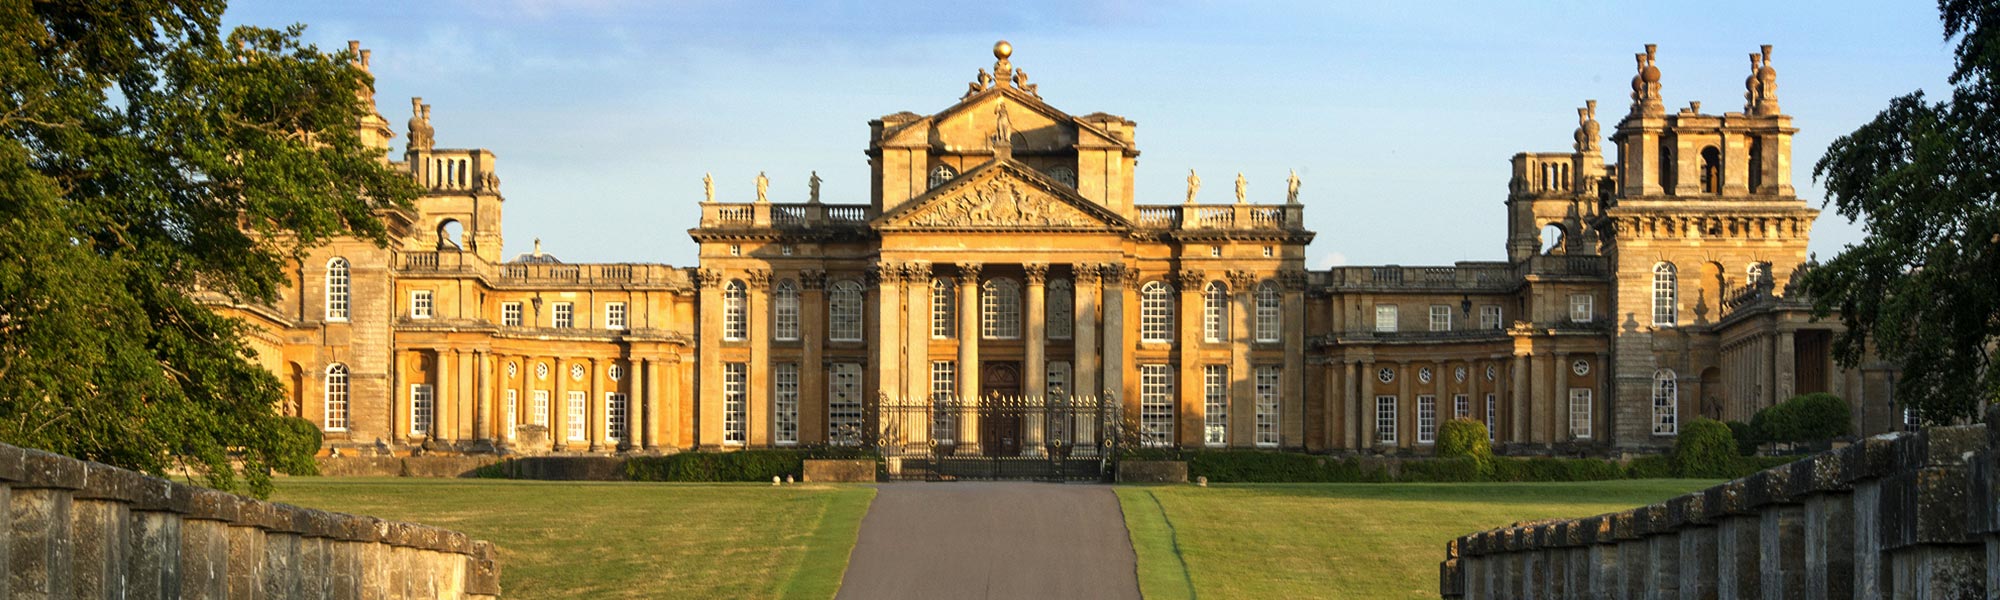 tourhub | Just Go Holidays | Blenheim Palace & Charming Oxford 